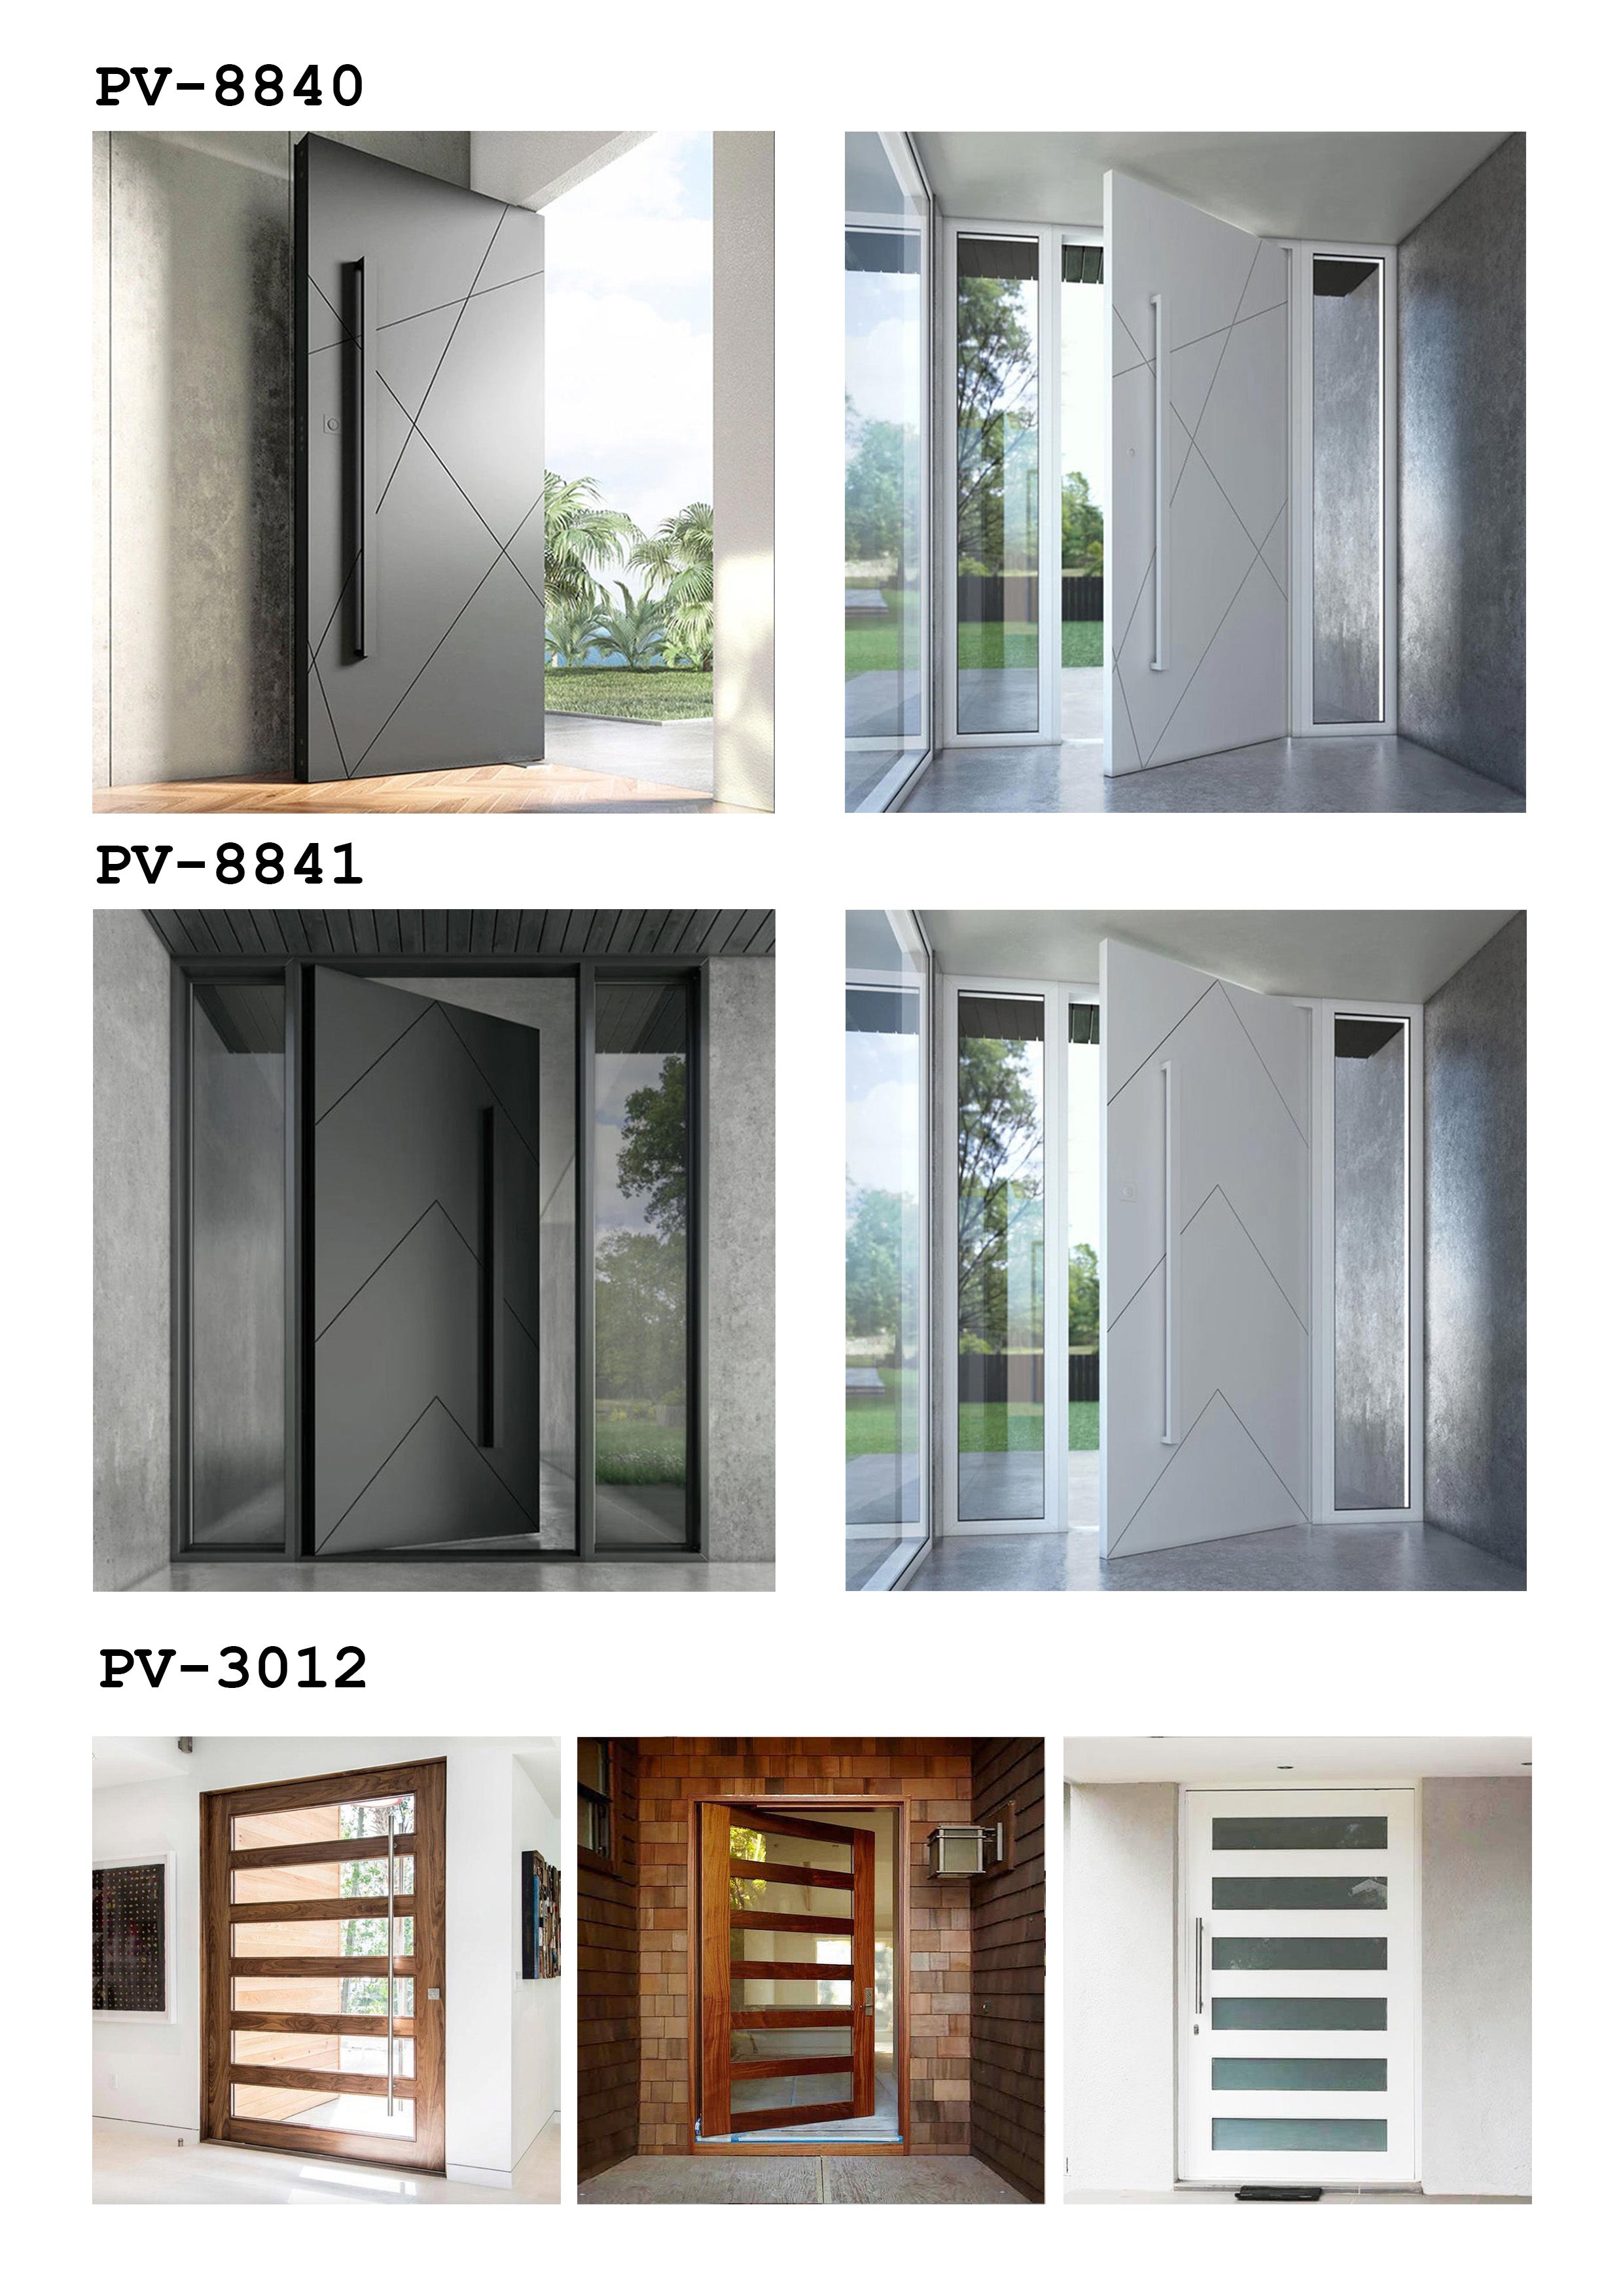 Prettywood Latest Popular Design Catalog Modern Exterior Front Entrance Pivot Door